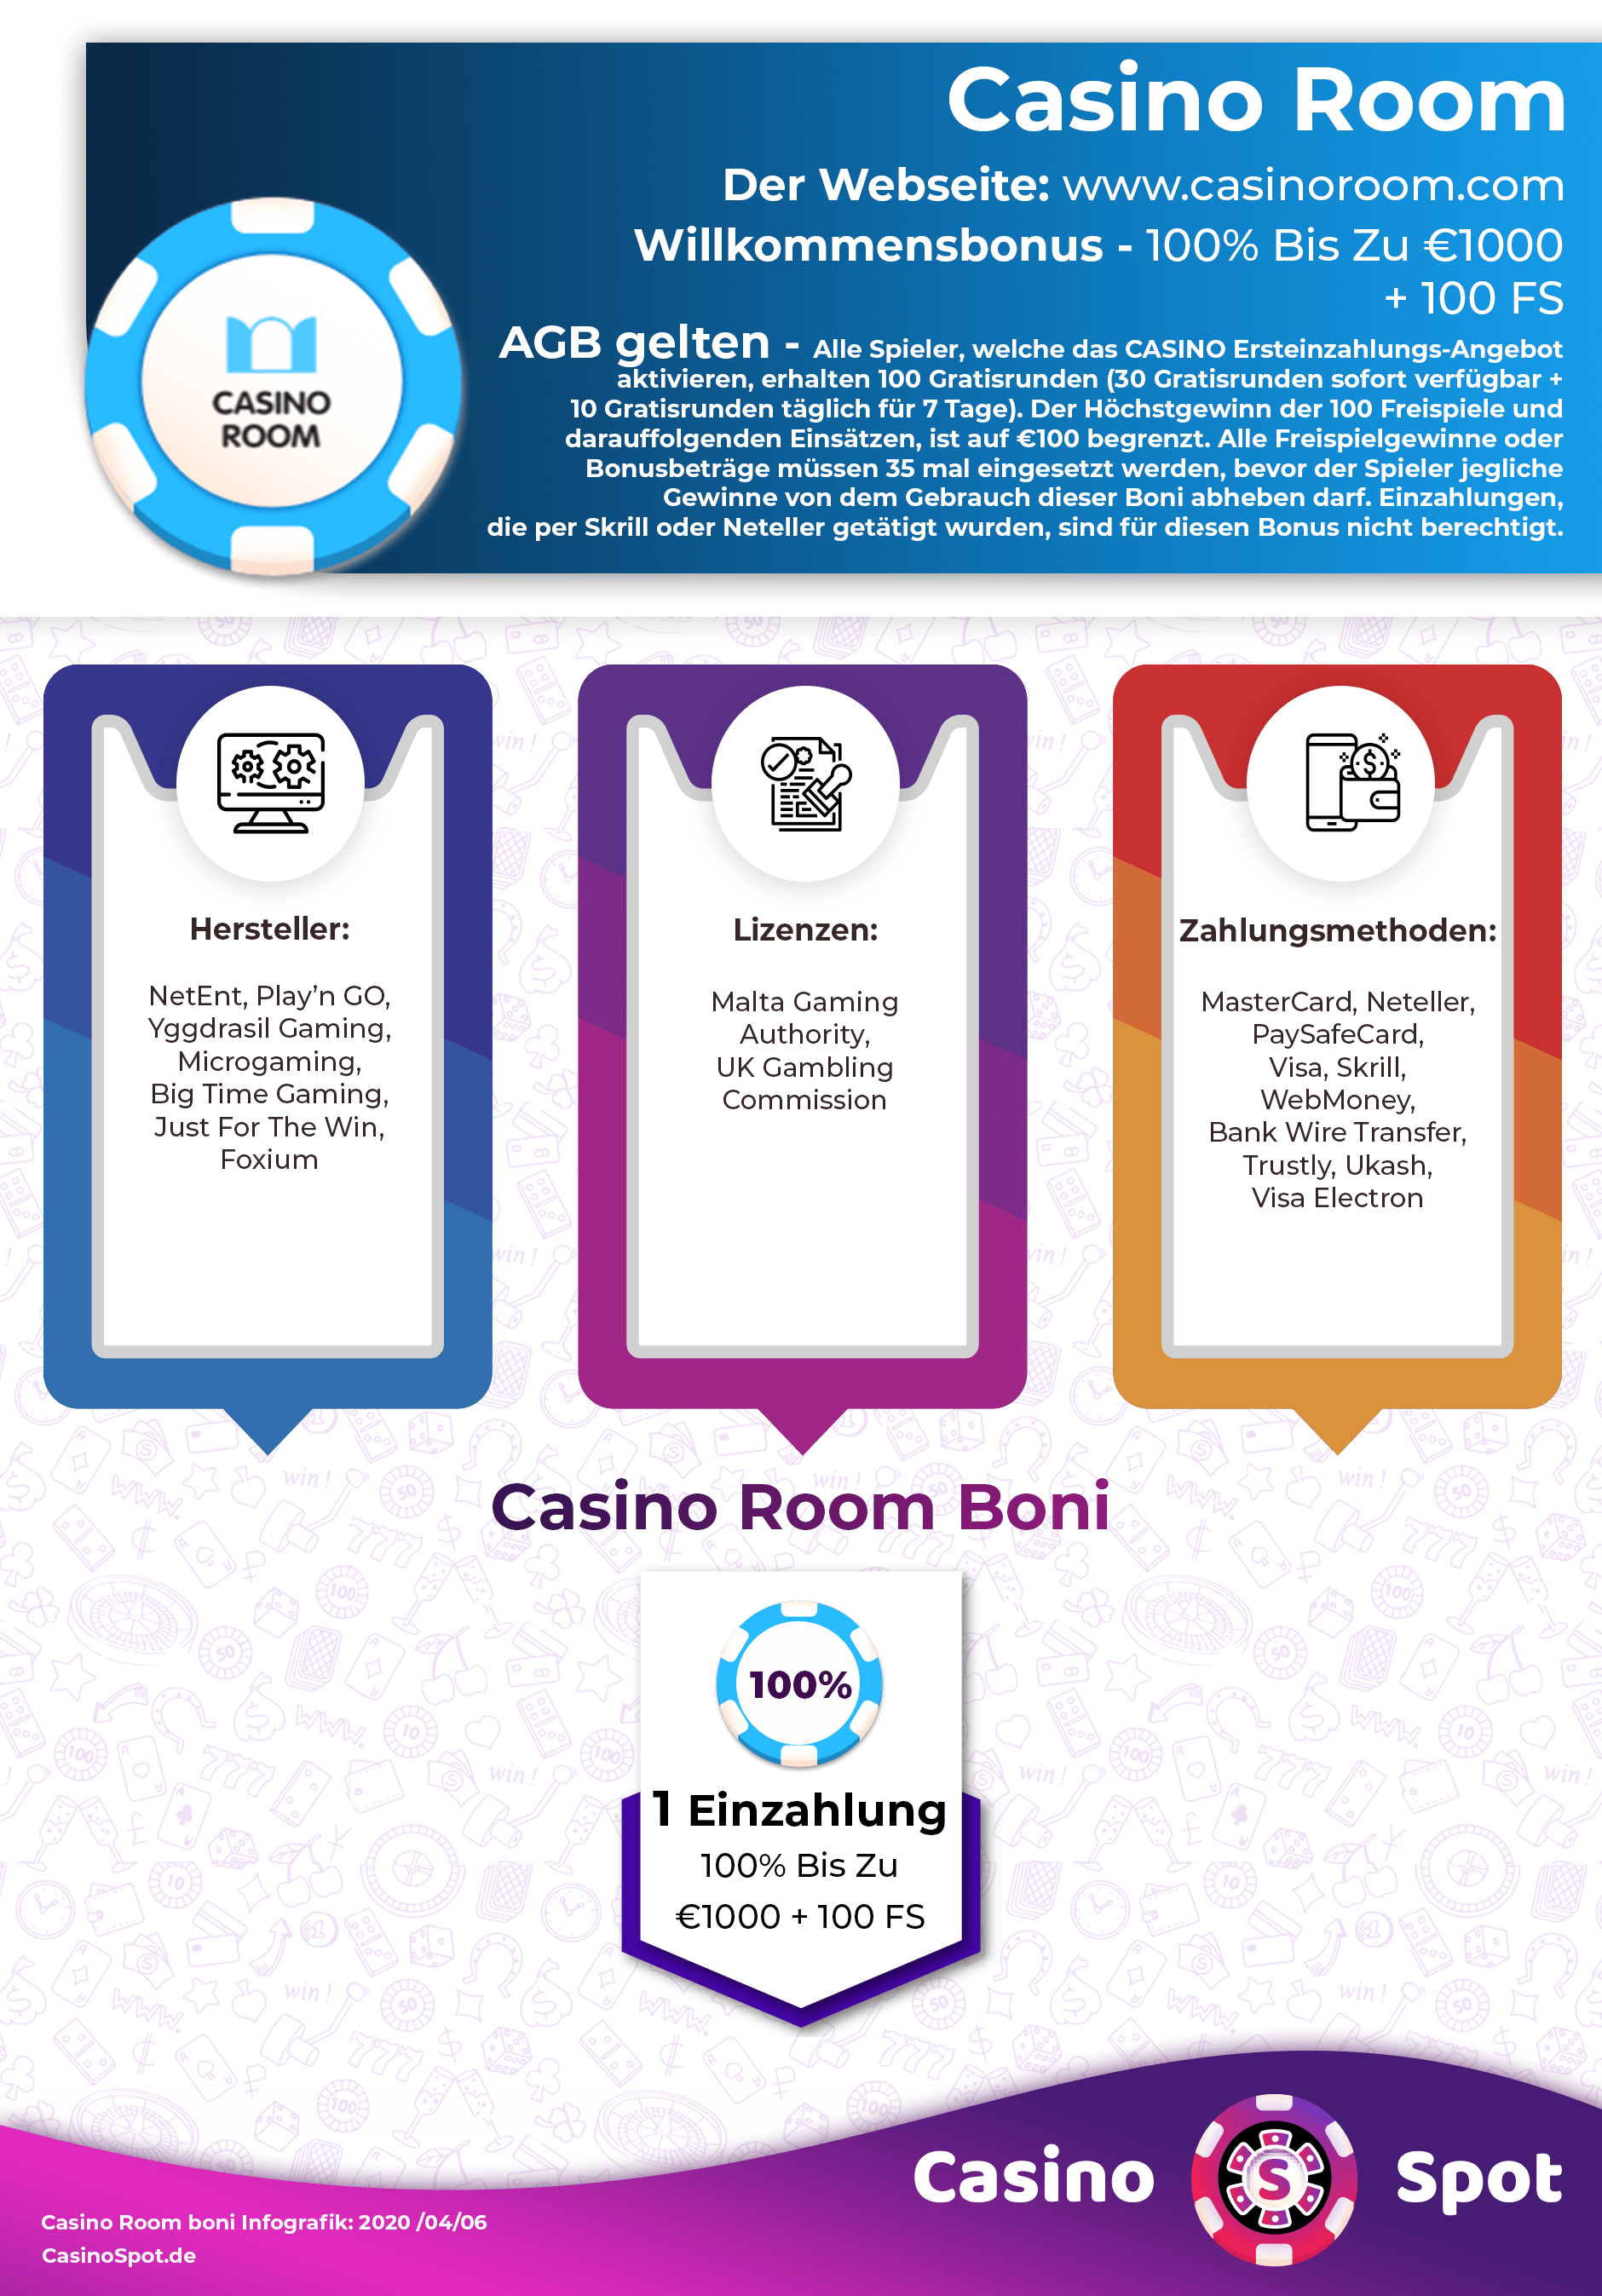 Casino Room No Deposit Code